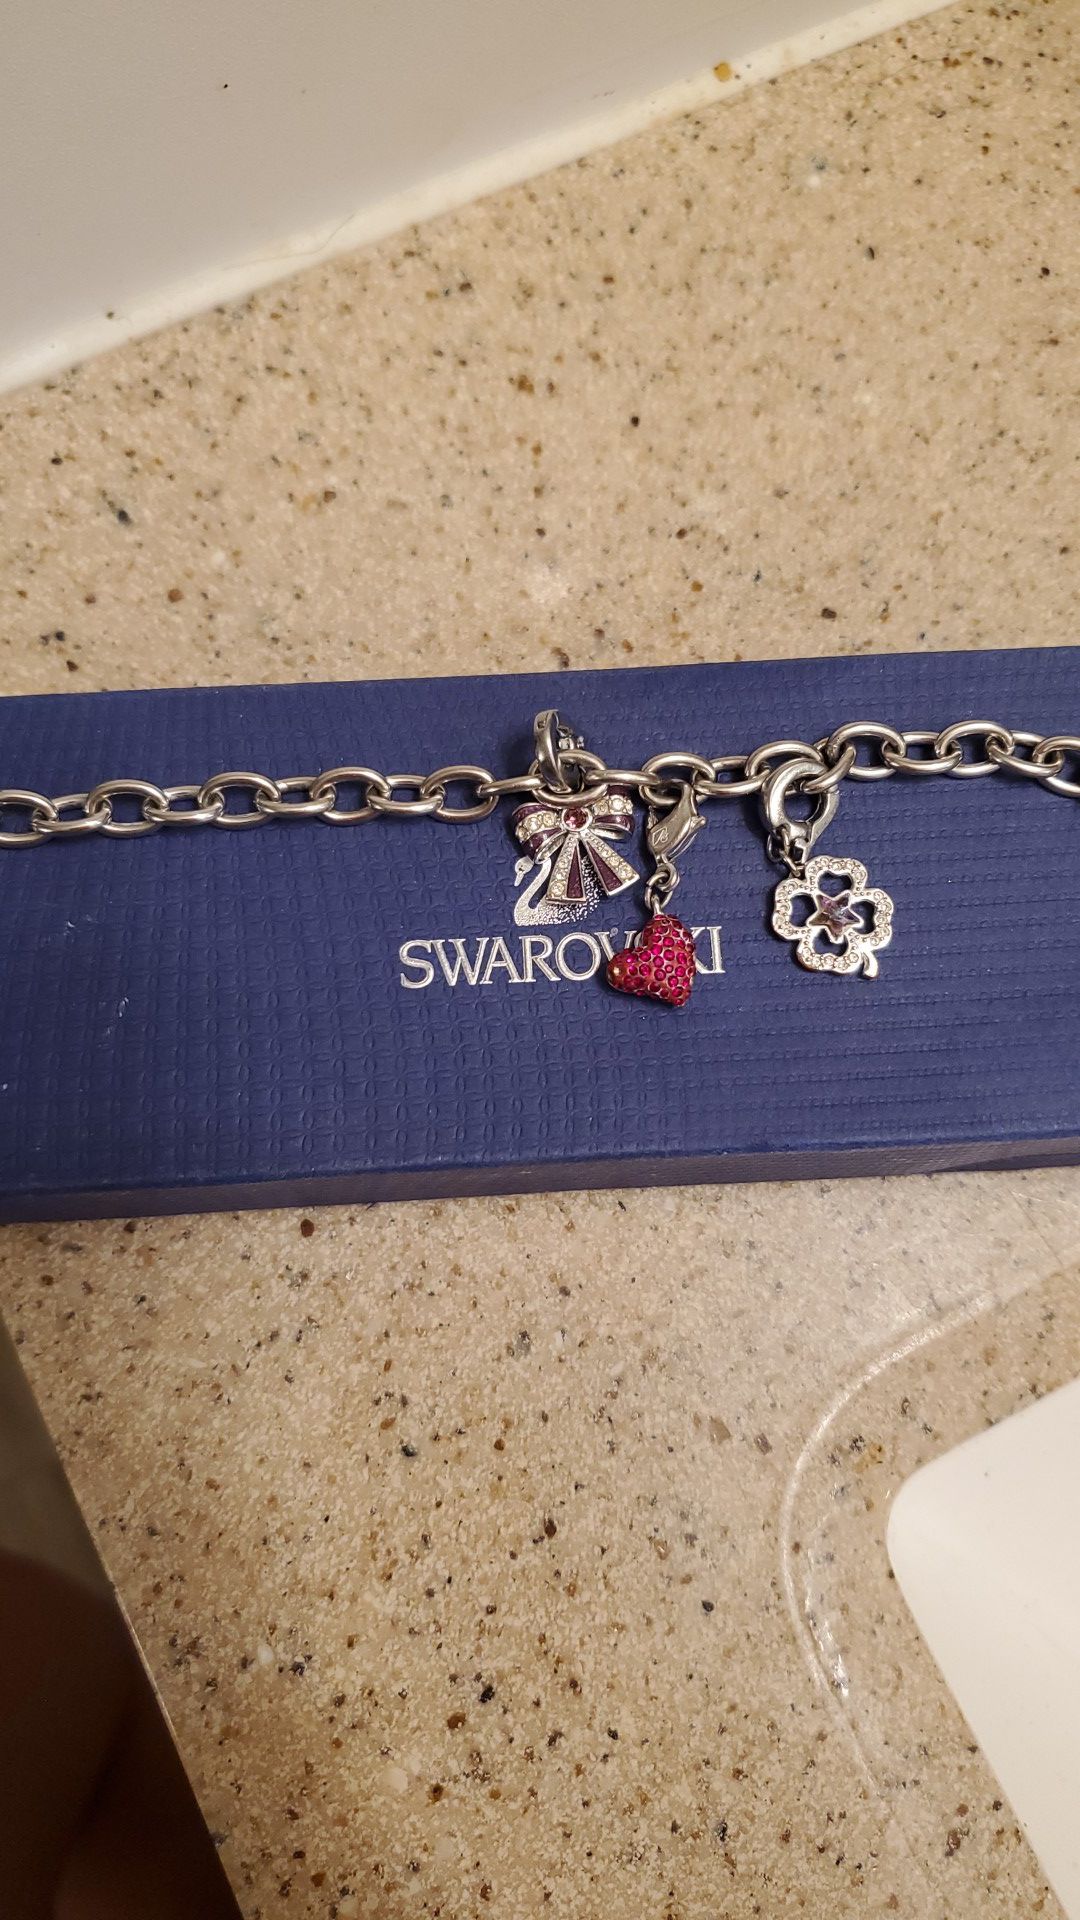 Swarovski charm bracelet